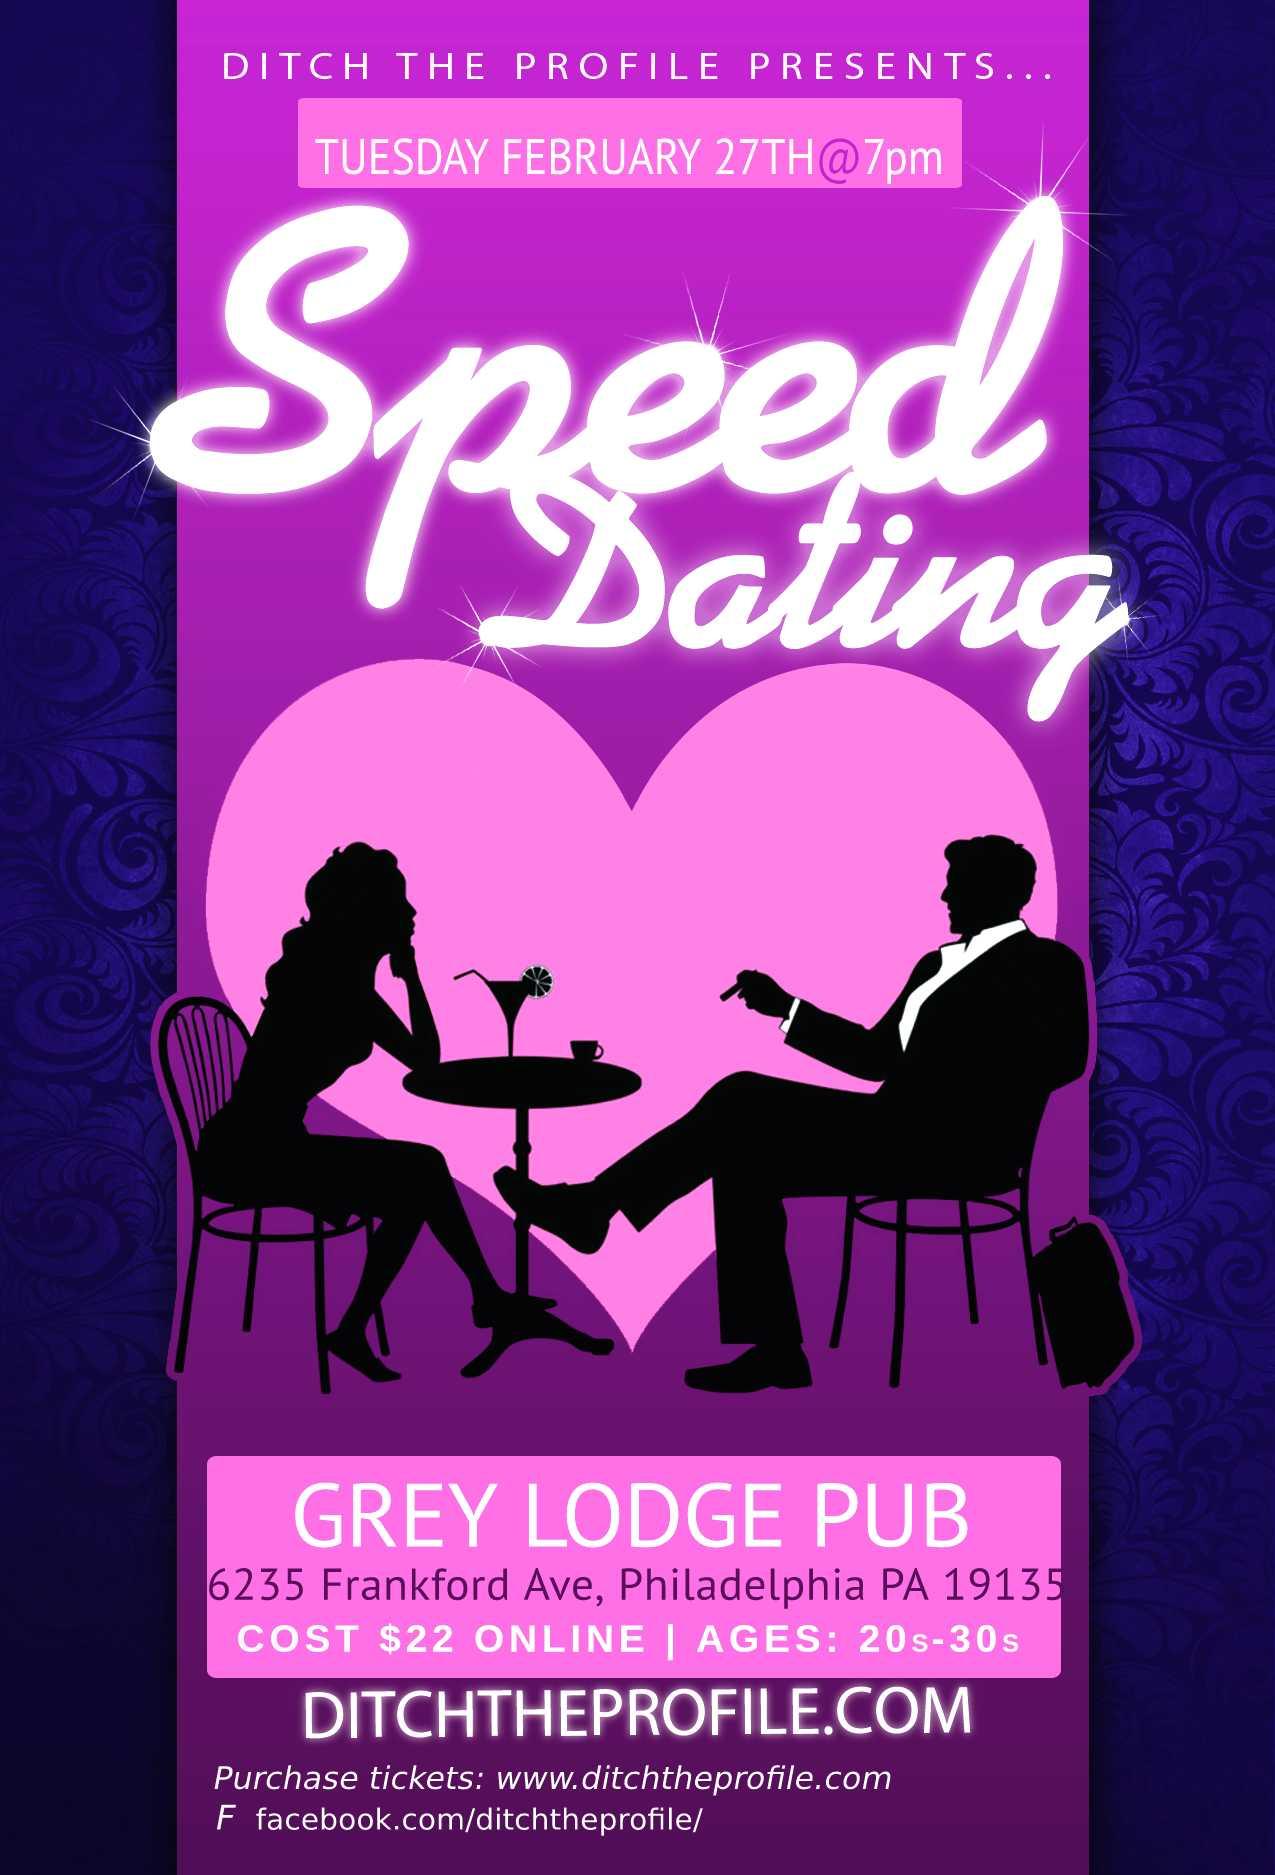 NE Philly Speed Dating 20's30's! The Fun Singles Philadelphia, PA